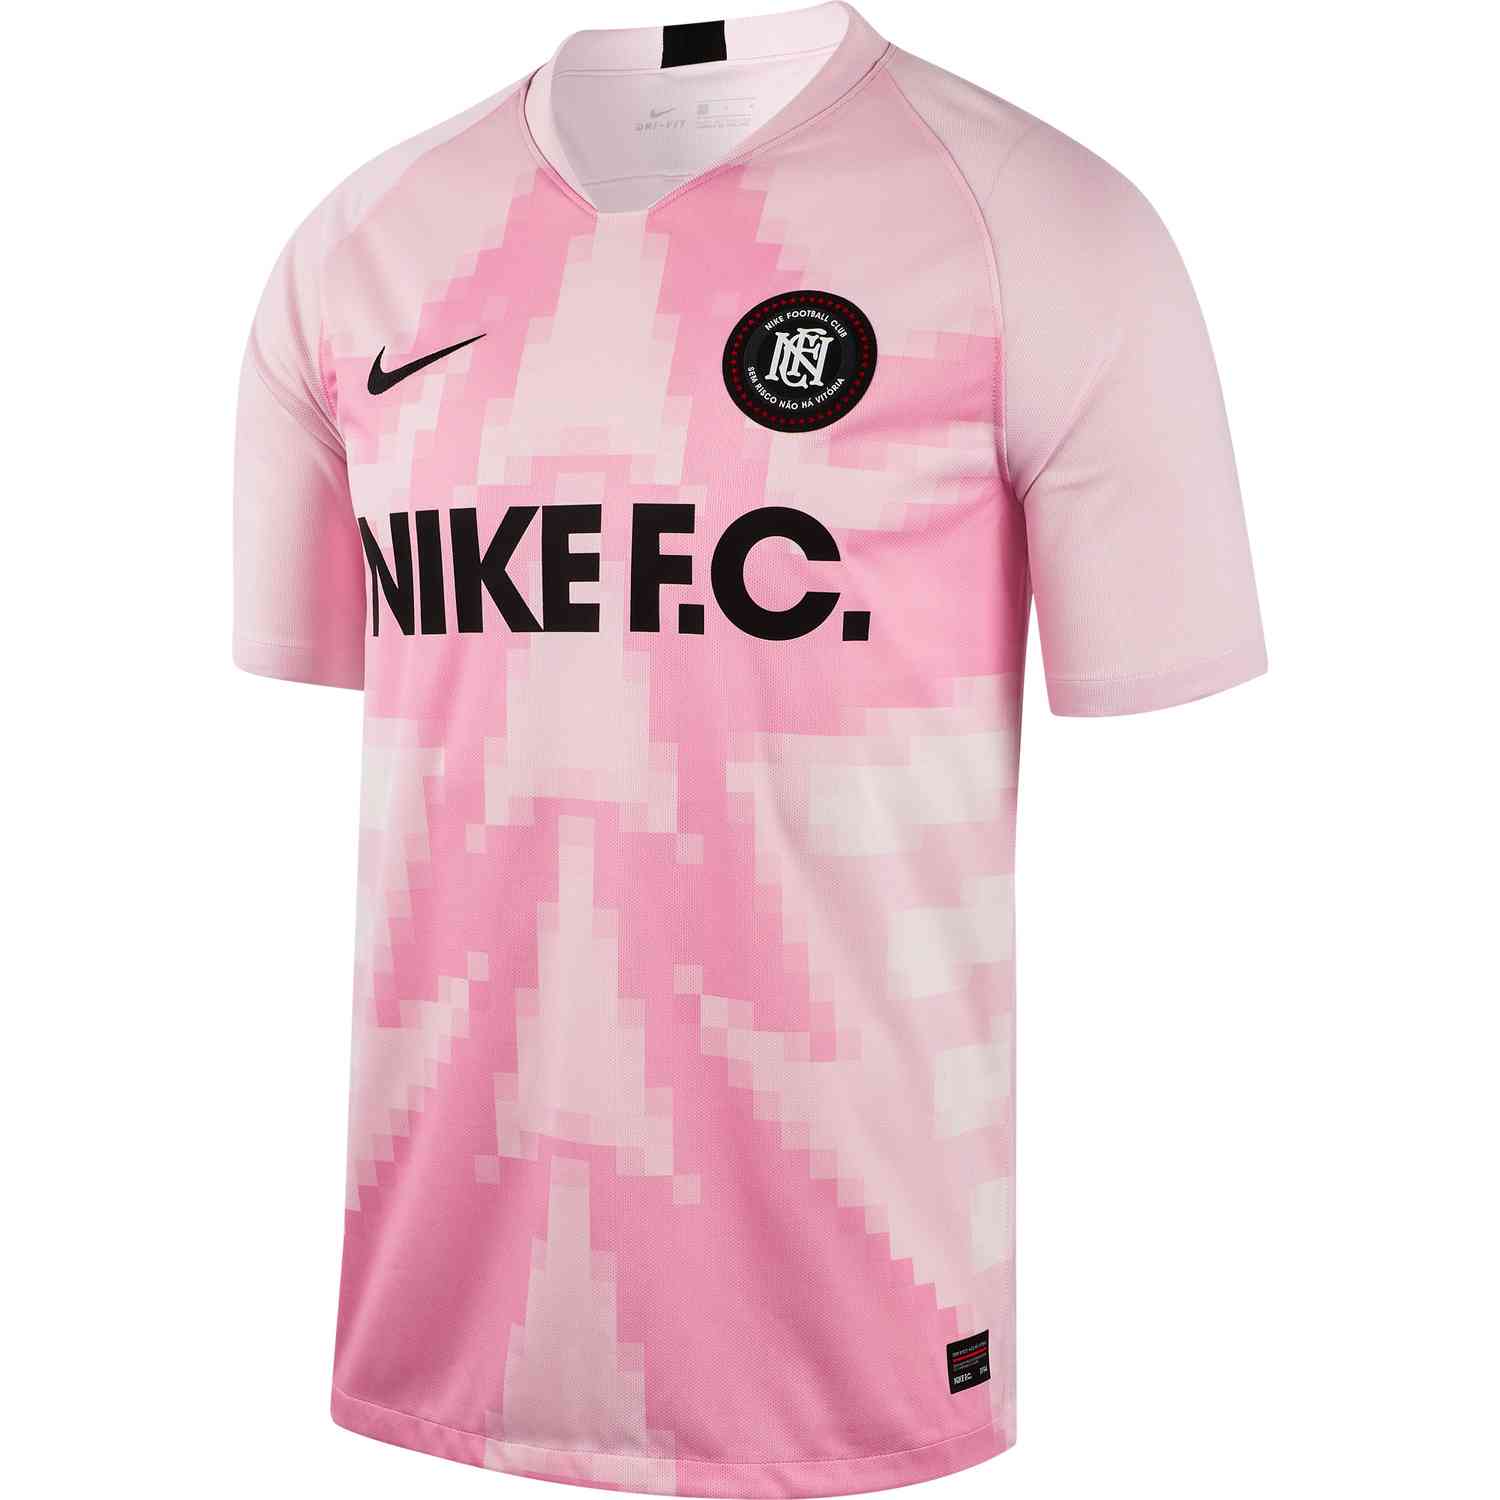 pink jersey